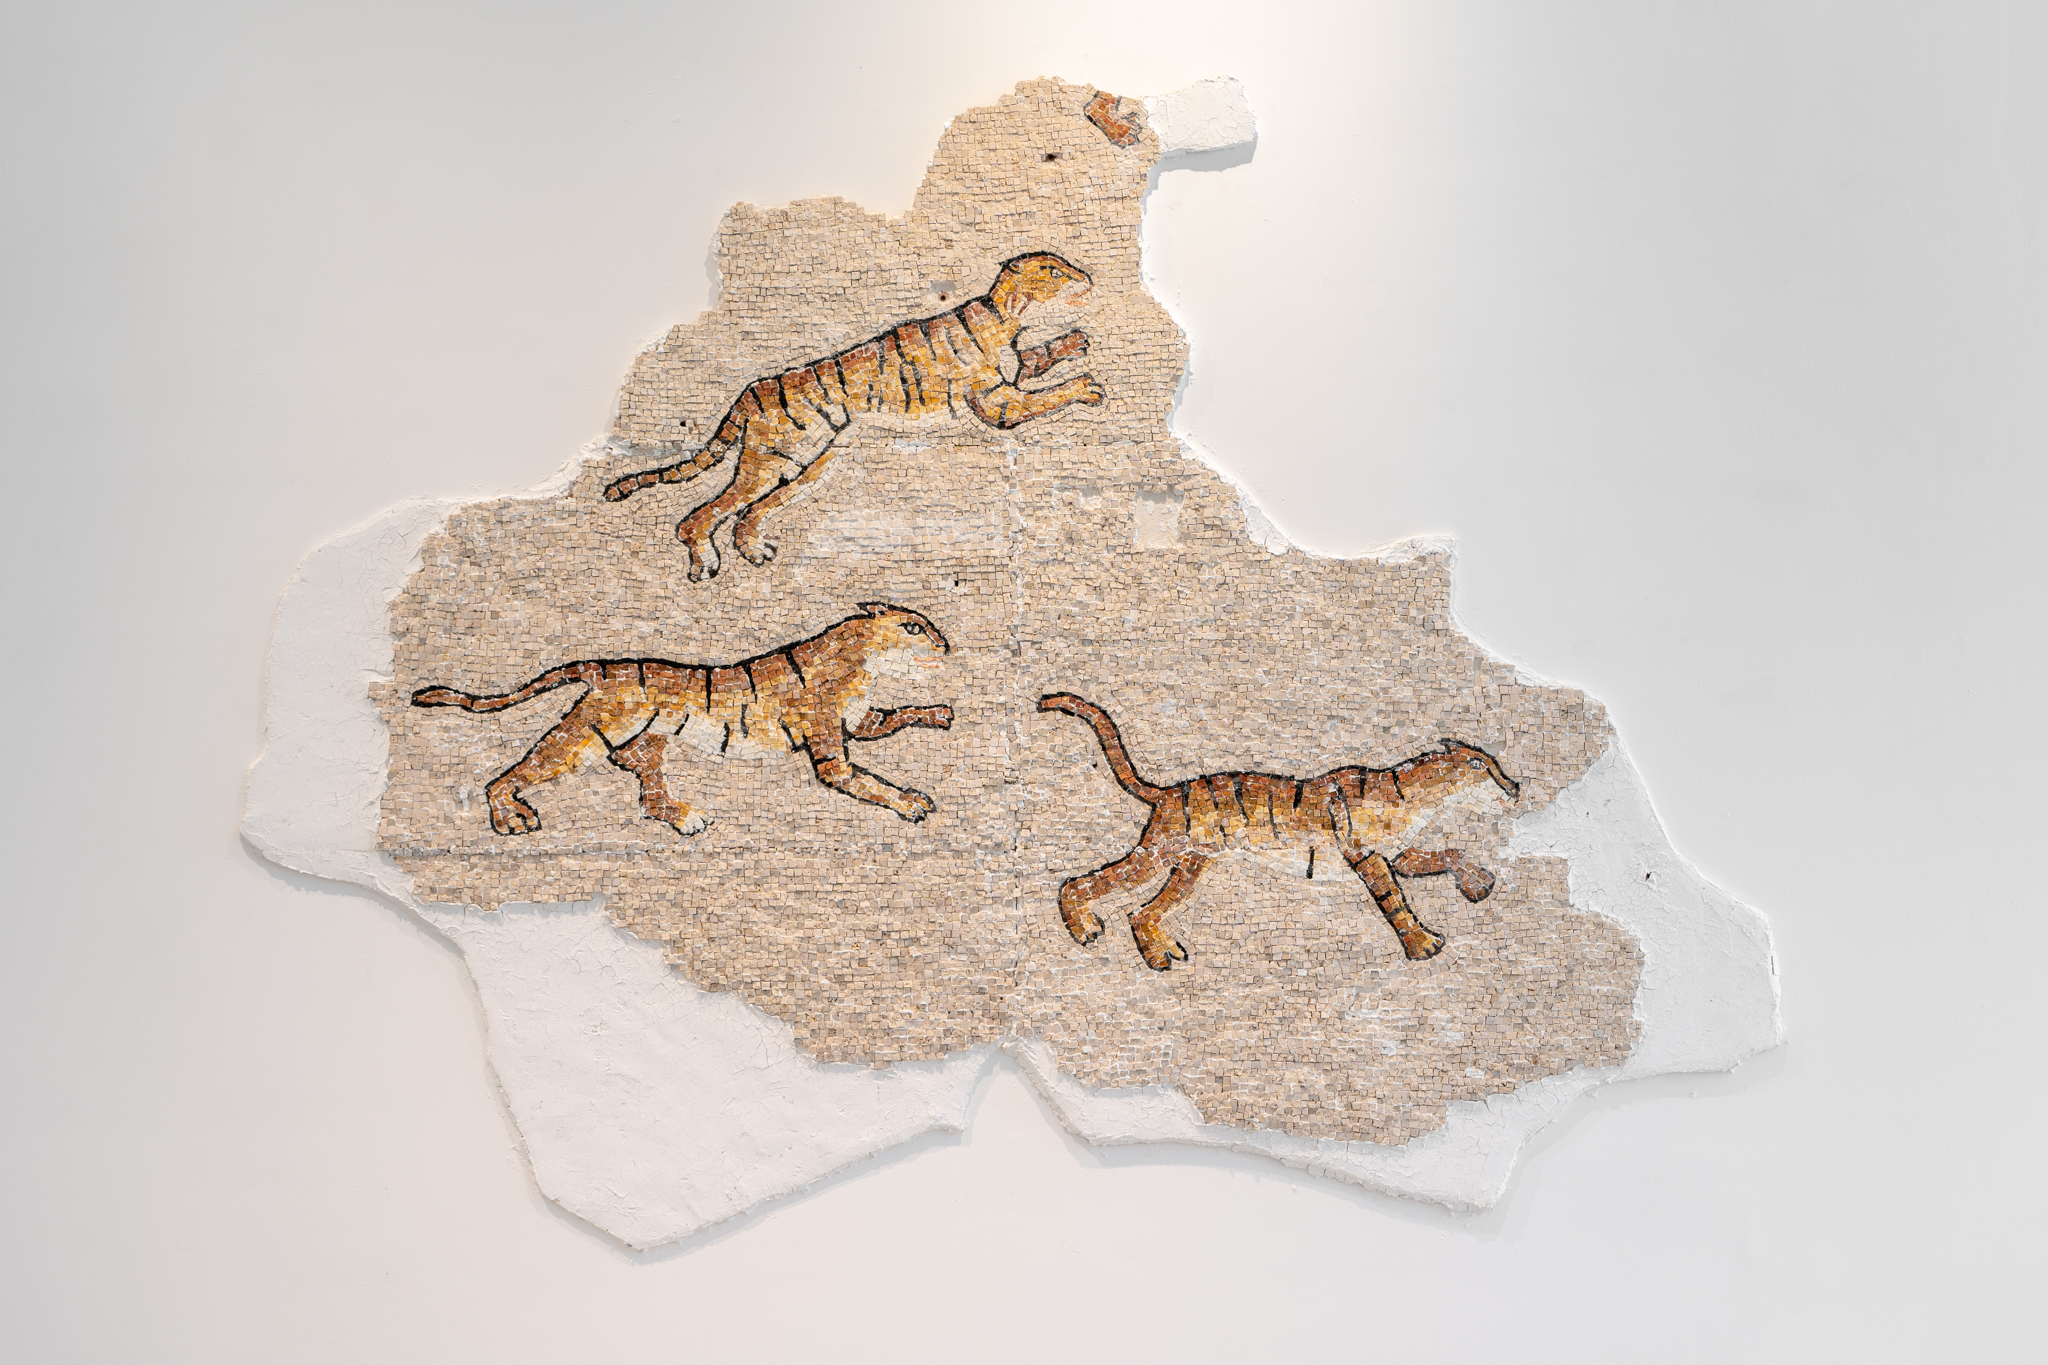 Elena Ceretti Stein, Three Tigers, 2022
Mosaic on wood panel, marble, sand, lime, marble powder, 170 x 280 cm. Photo by Daniel Hanoch